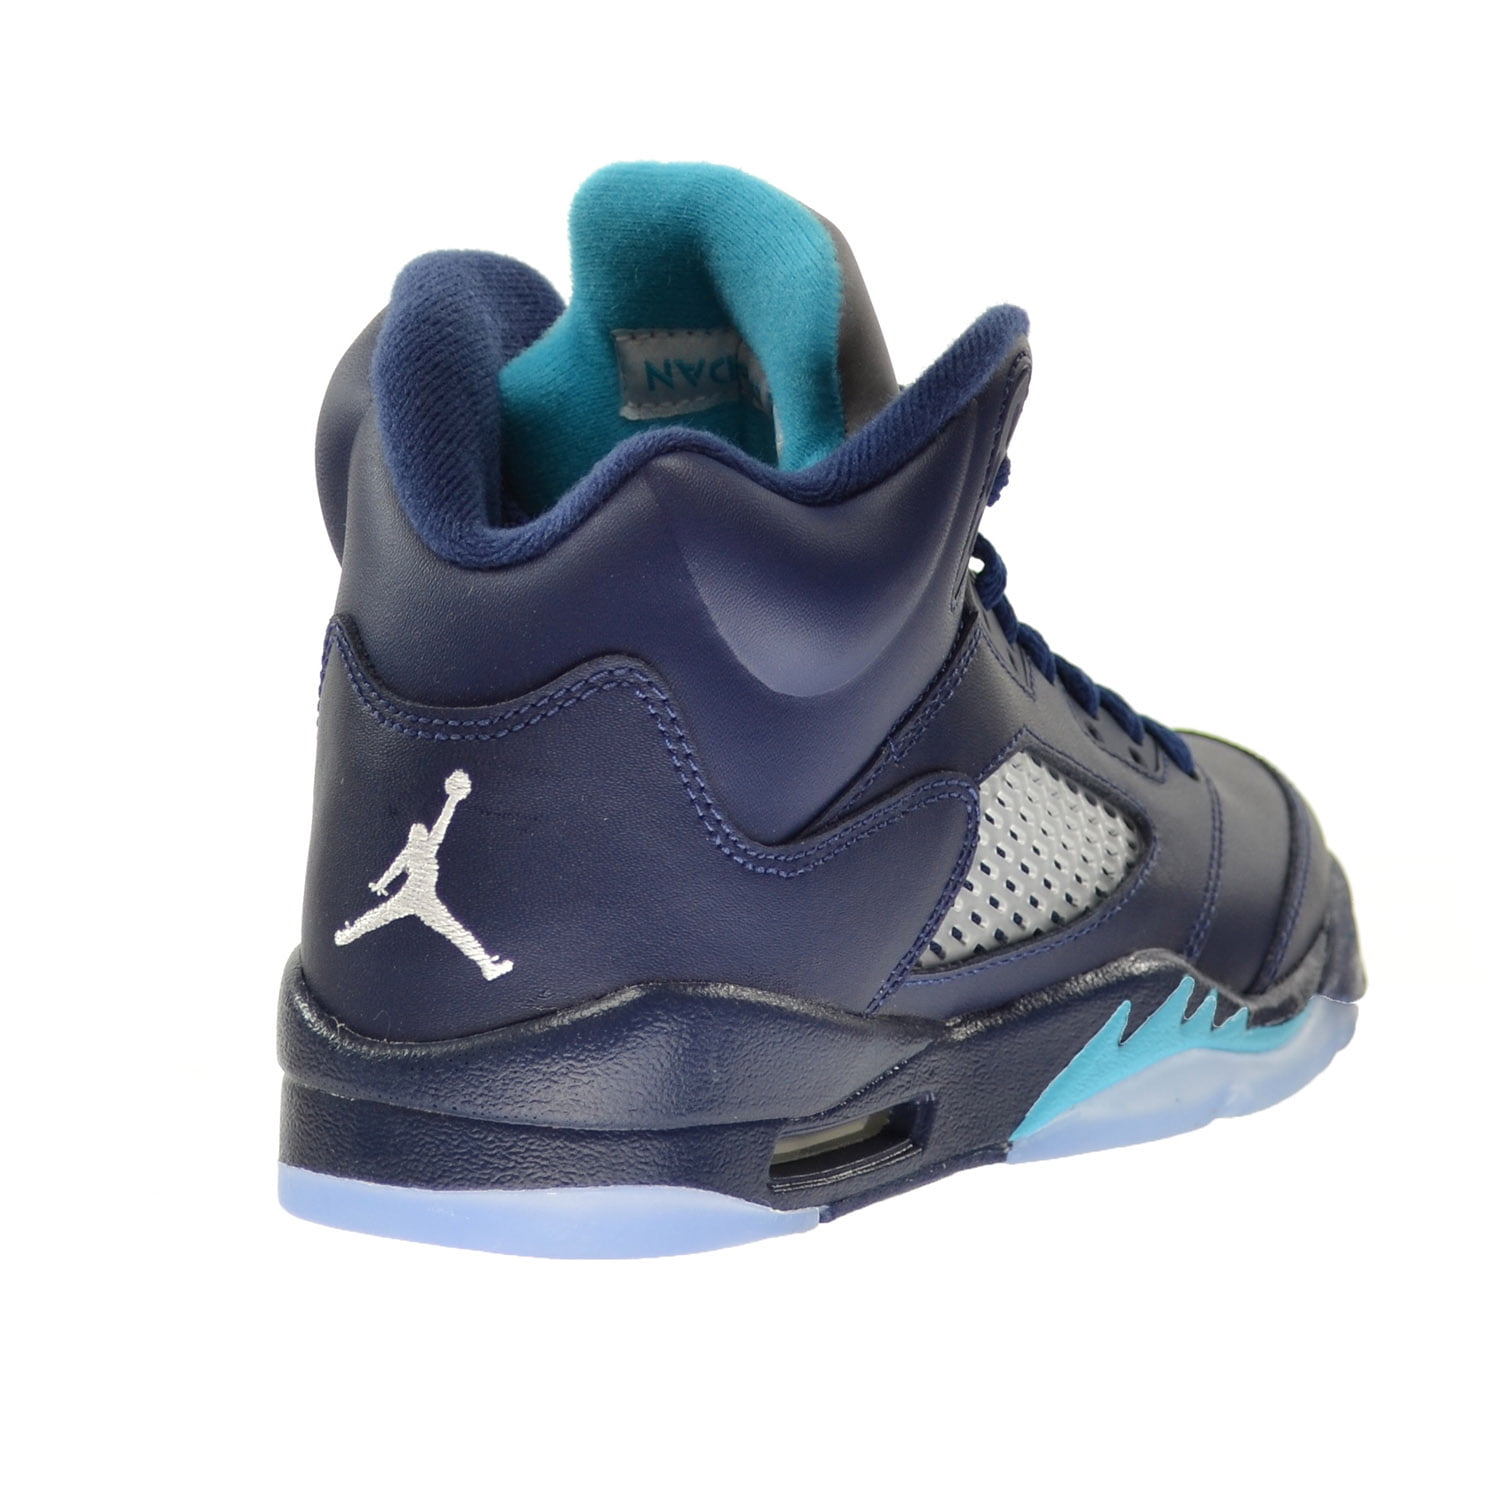 Air Jordan 5 Retro BG Big Kid's Shoes Midnight Navy/Turquiose Blue/White  440888-405 (6.5 M US)